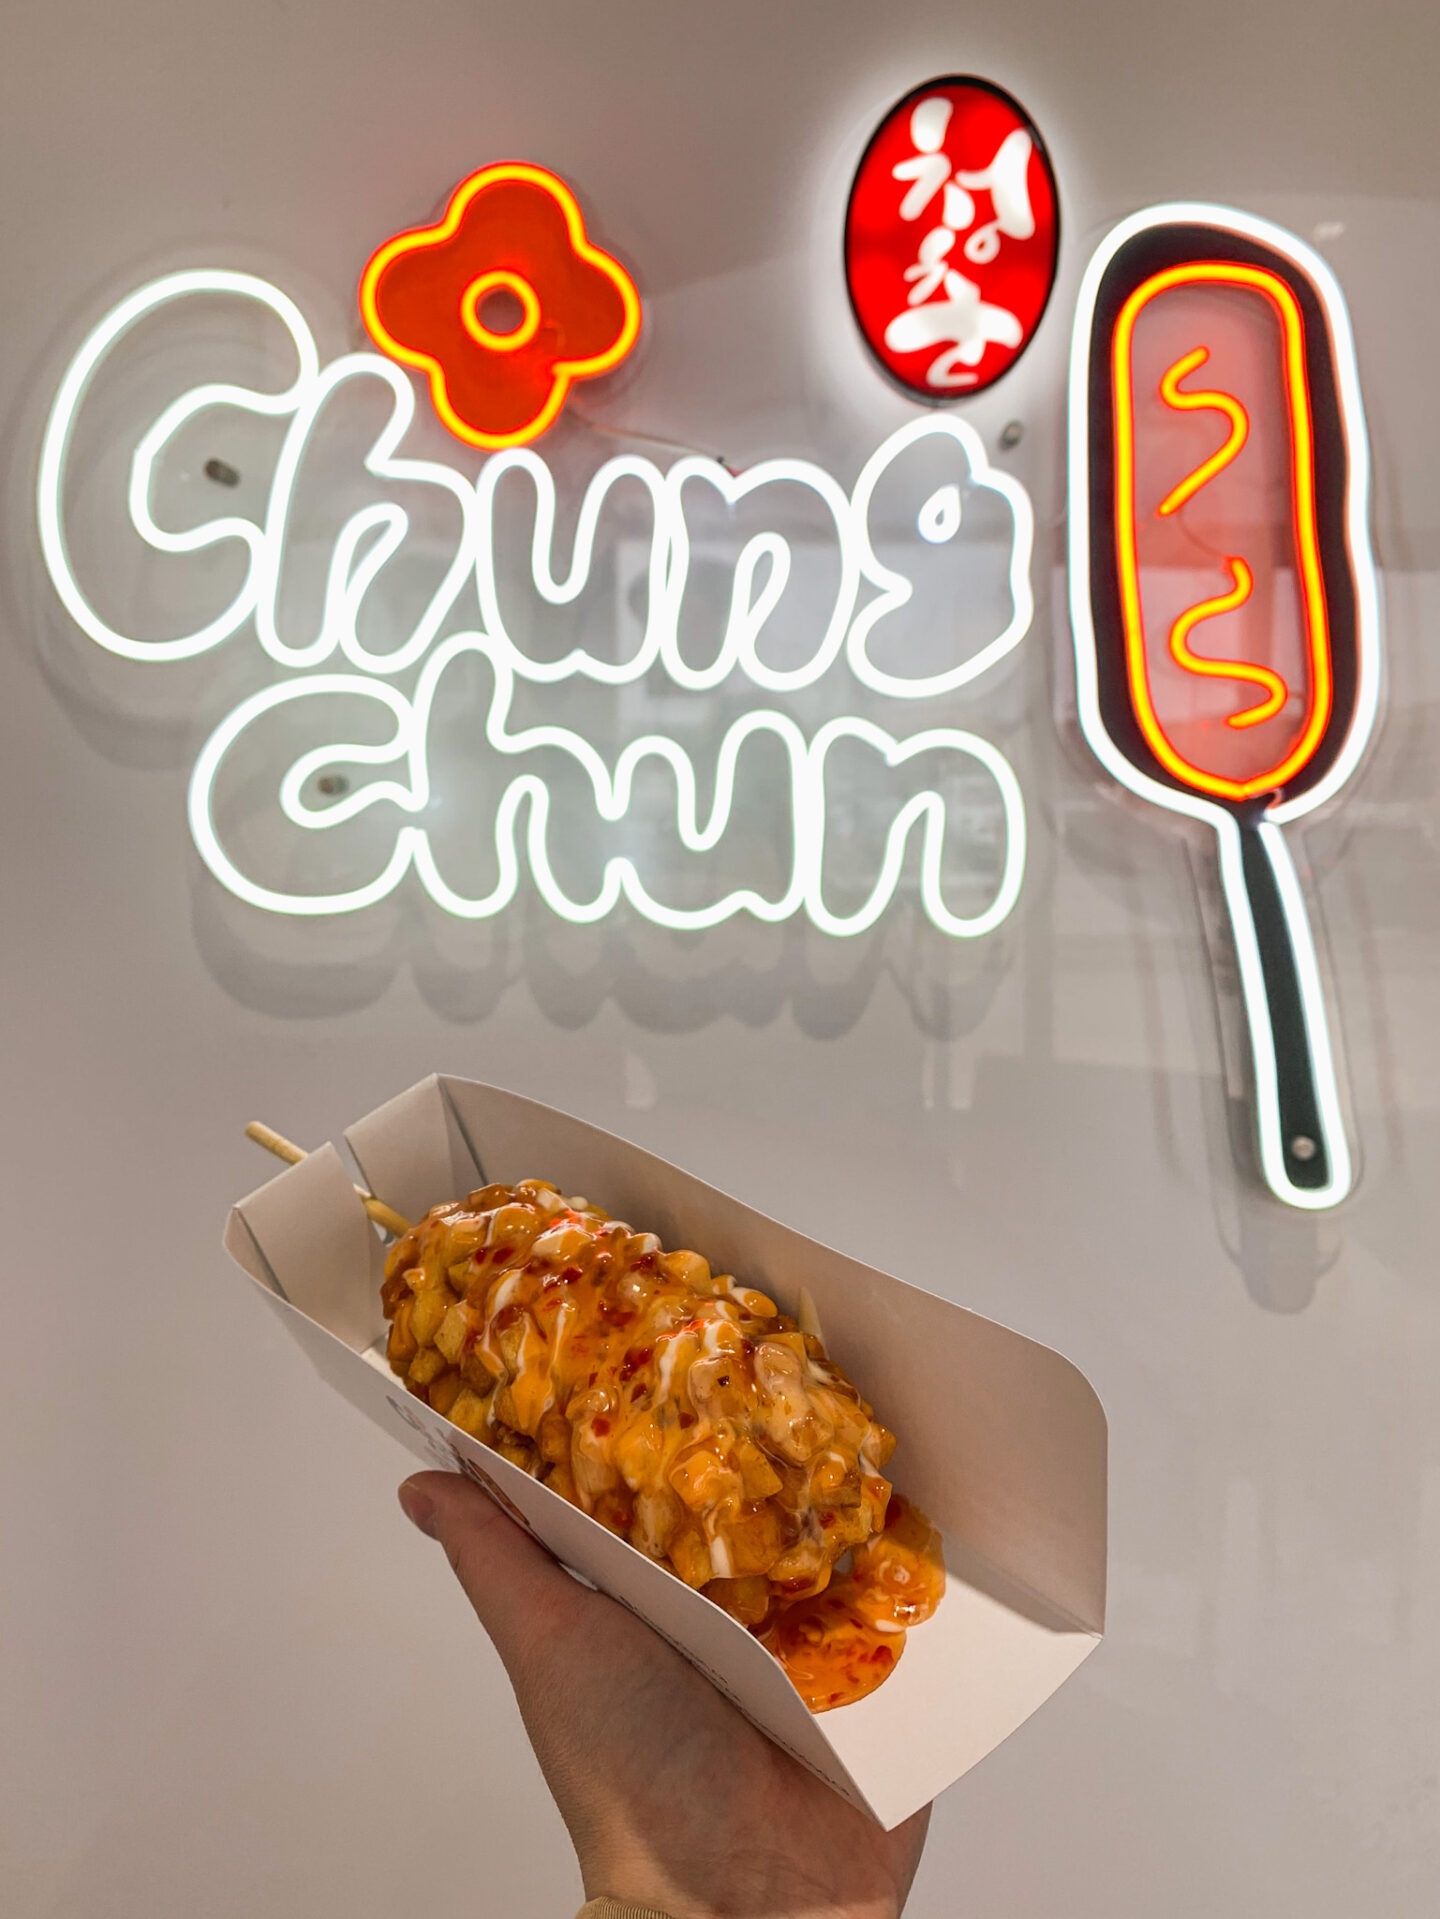 Korean-style hot dog from Chungchun Rice Dog in Aurora, Ontario